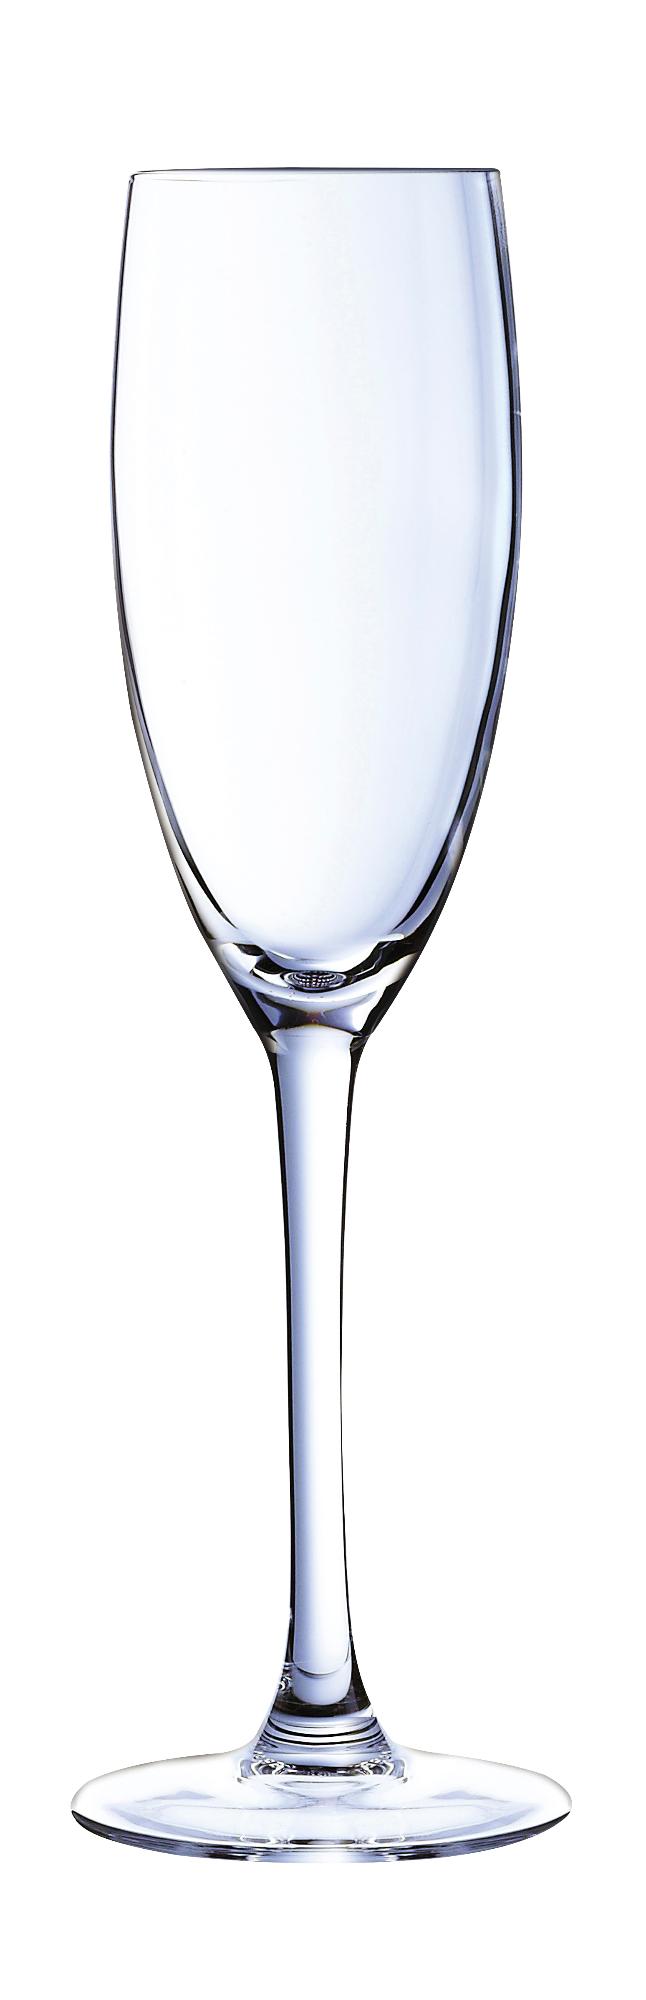 Cabernet champagne glass, 160ml